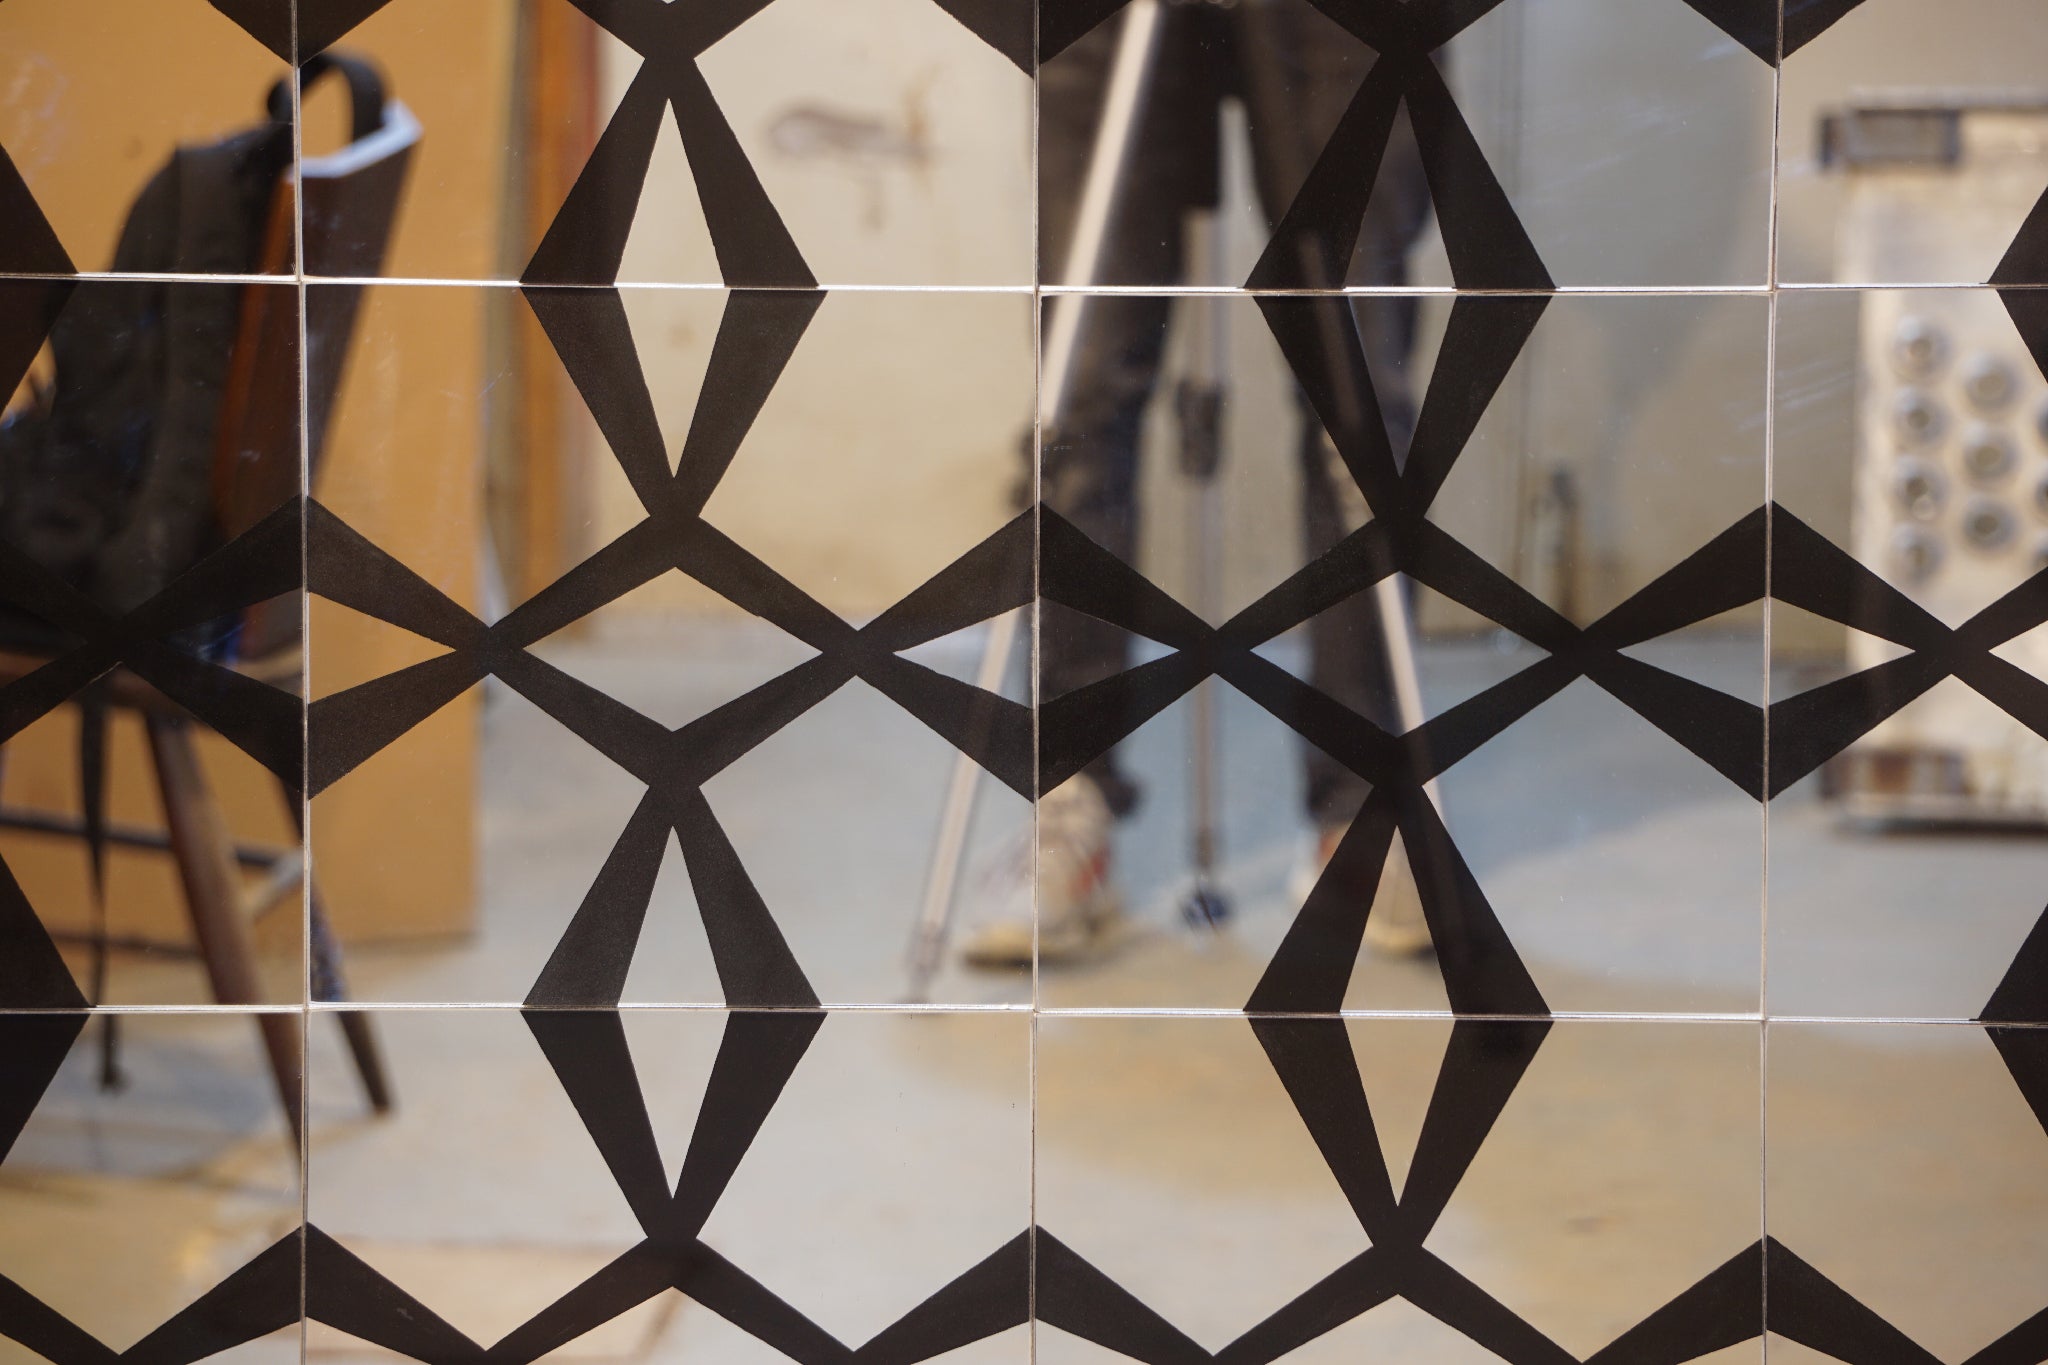 Etched Glass Mirror, Black Geometric Pattern, Mid Century Art Mirror